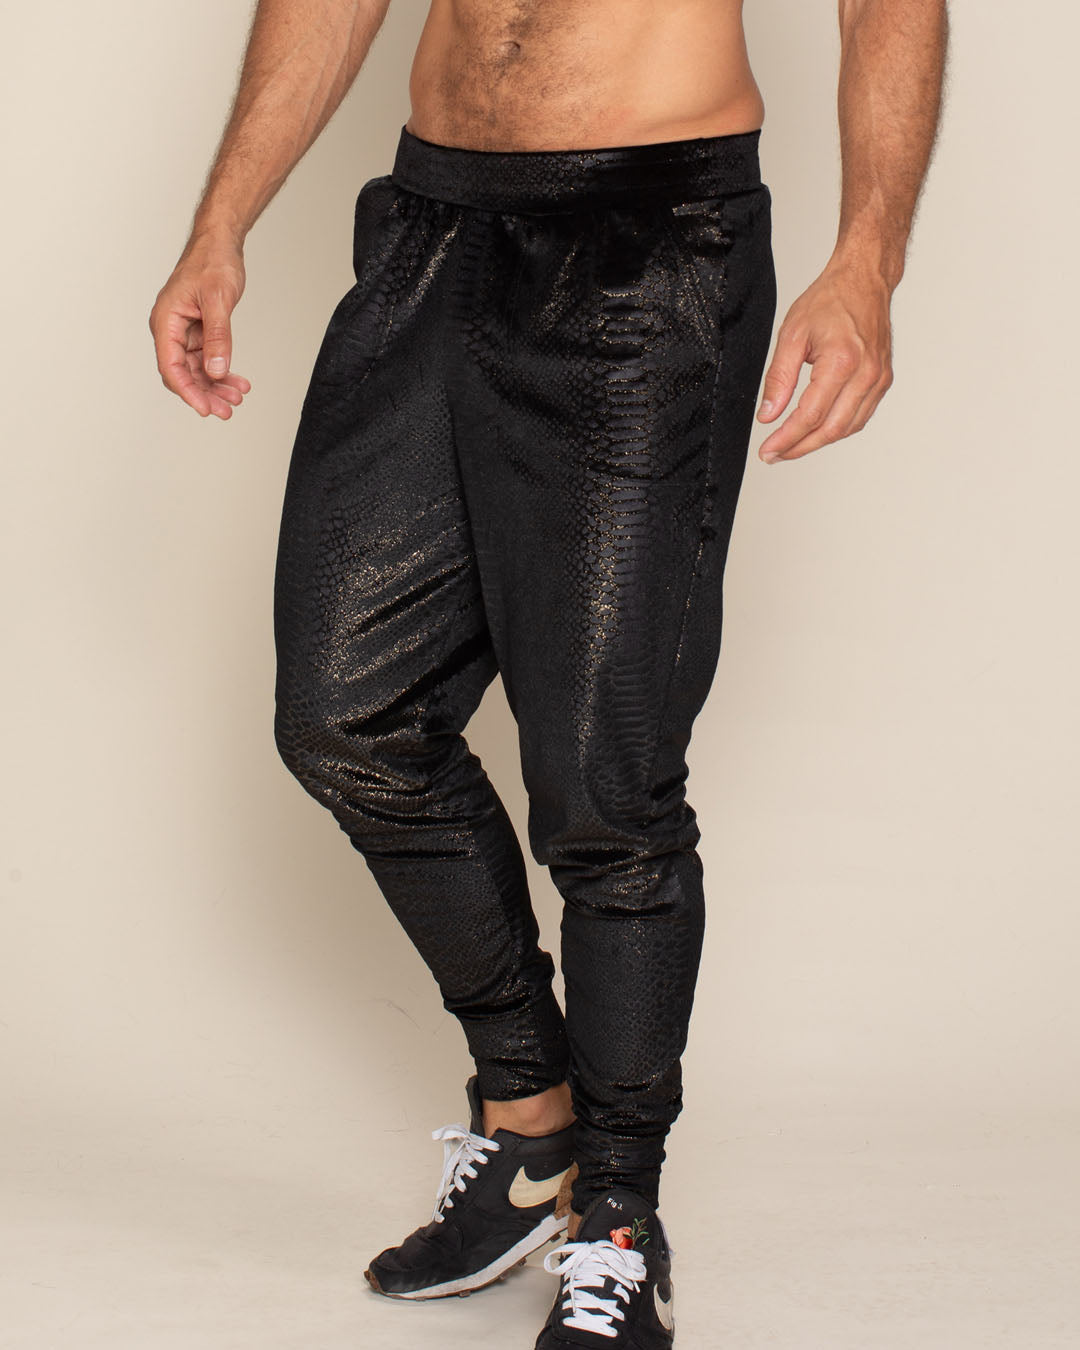 Shiny Black Snakeskin Pants Men - Slim Fit Pants